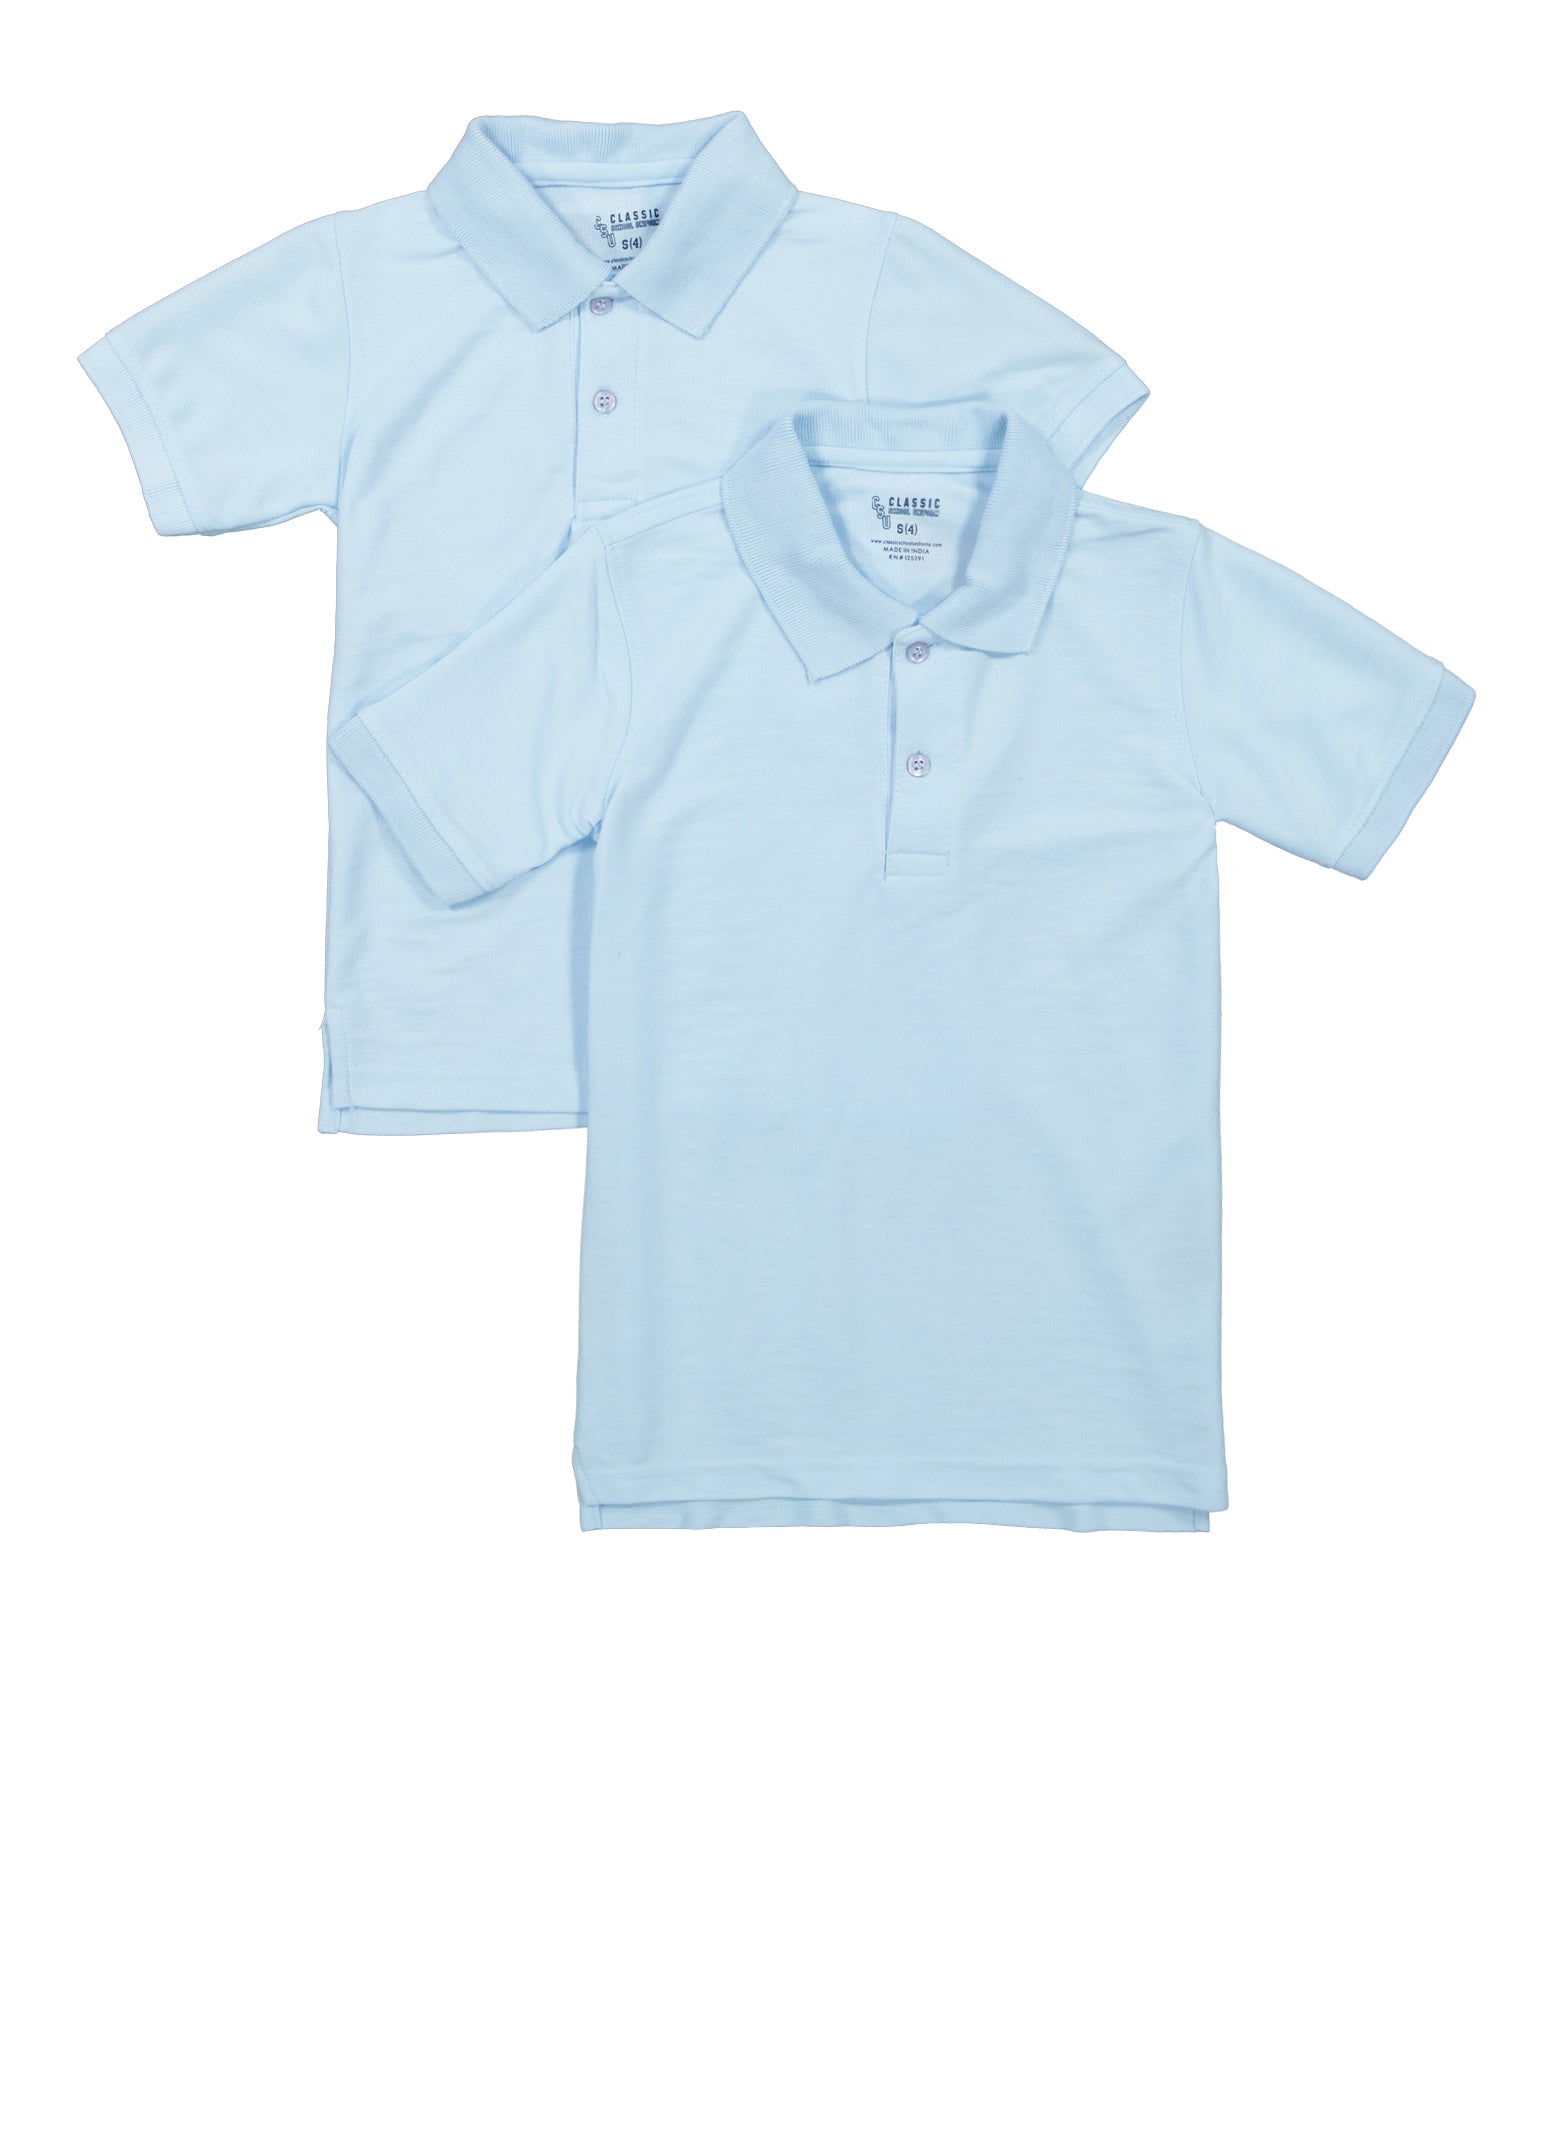 Boys 4-7 2 Pack Short Sleeve Polo Shirt, Blue, Size 7